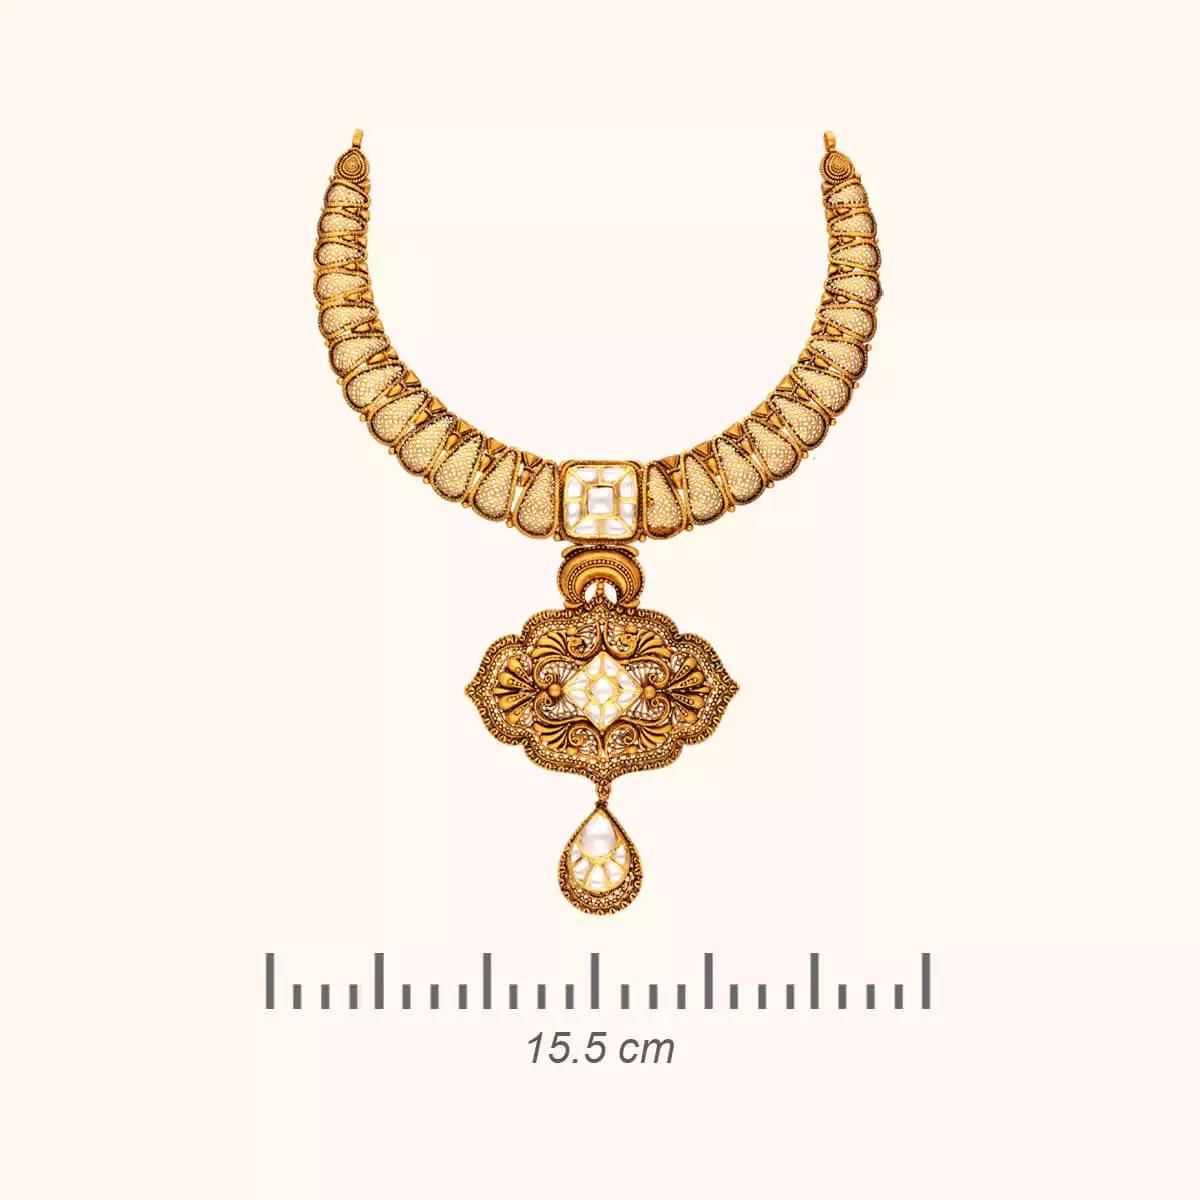 22 KT Antique Gold Necklace